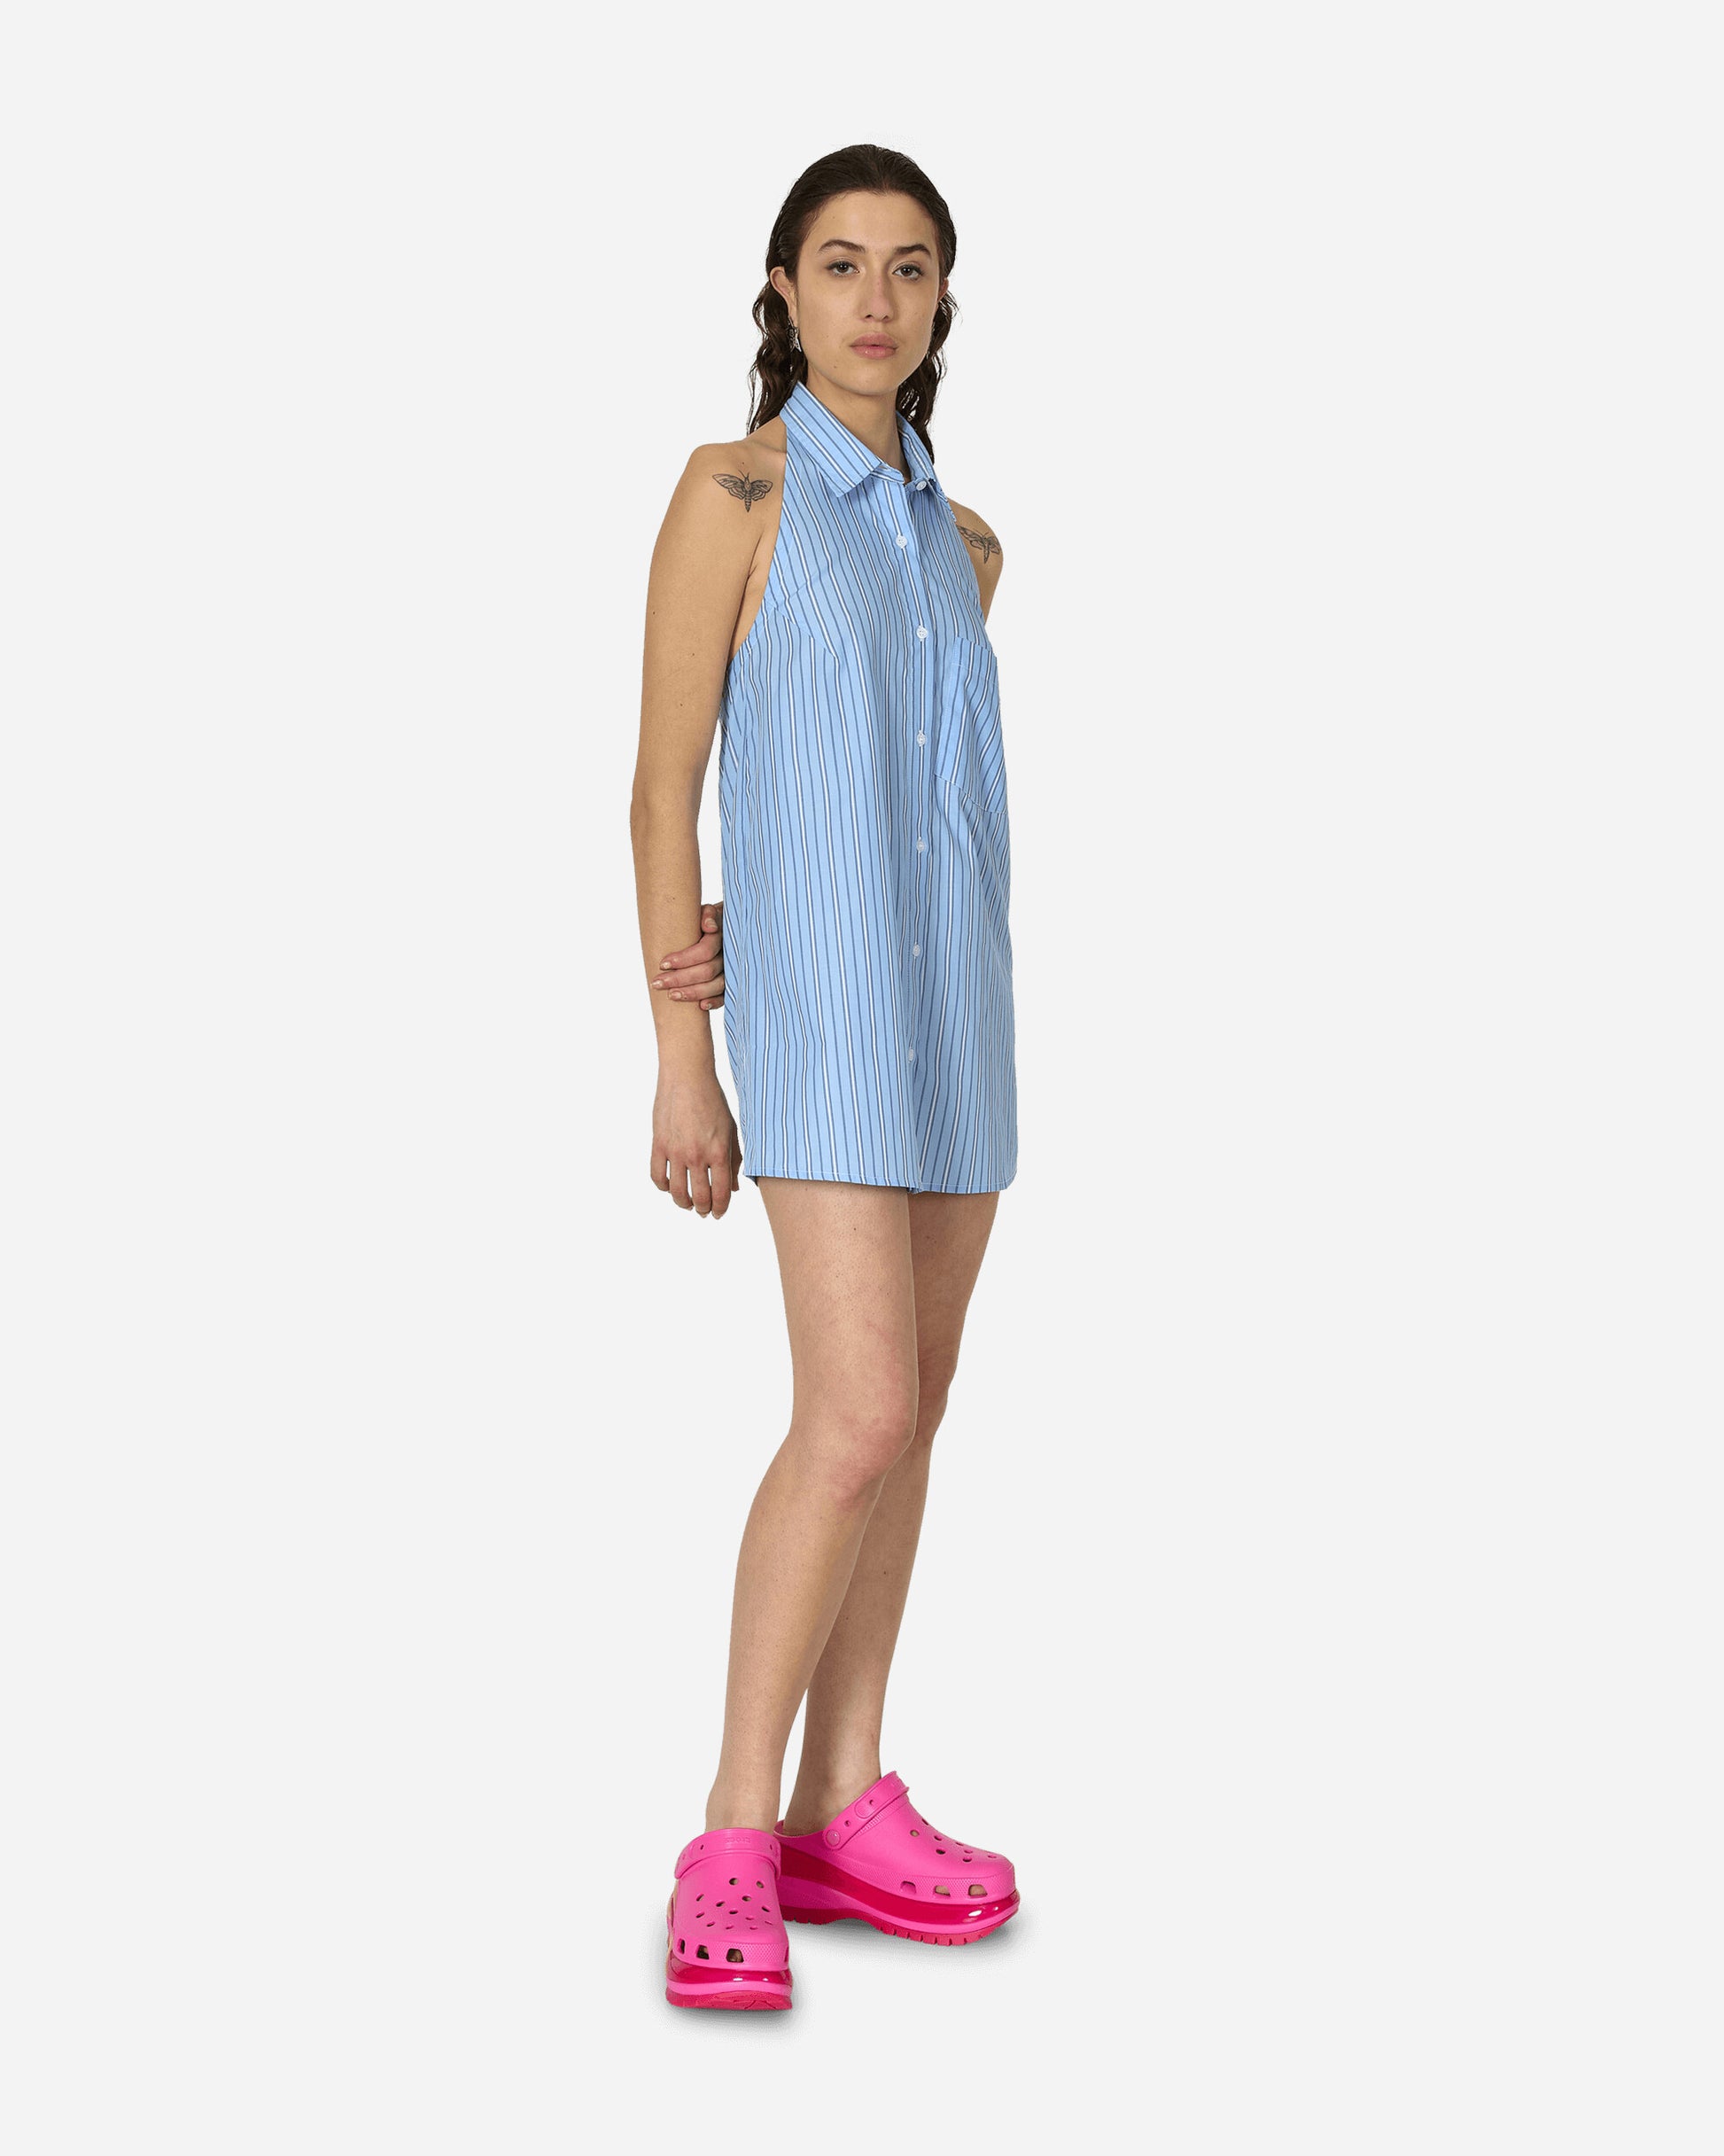 Abra Wmns Shirt Mini Dress White/Blue Dresses Dress Short CSMD1020 WHITE-BLUE